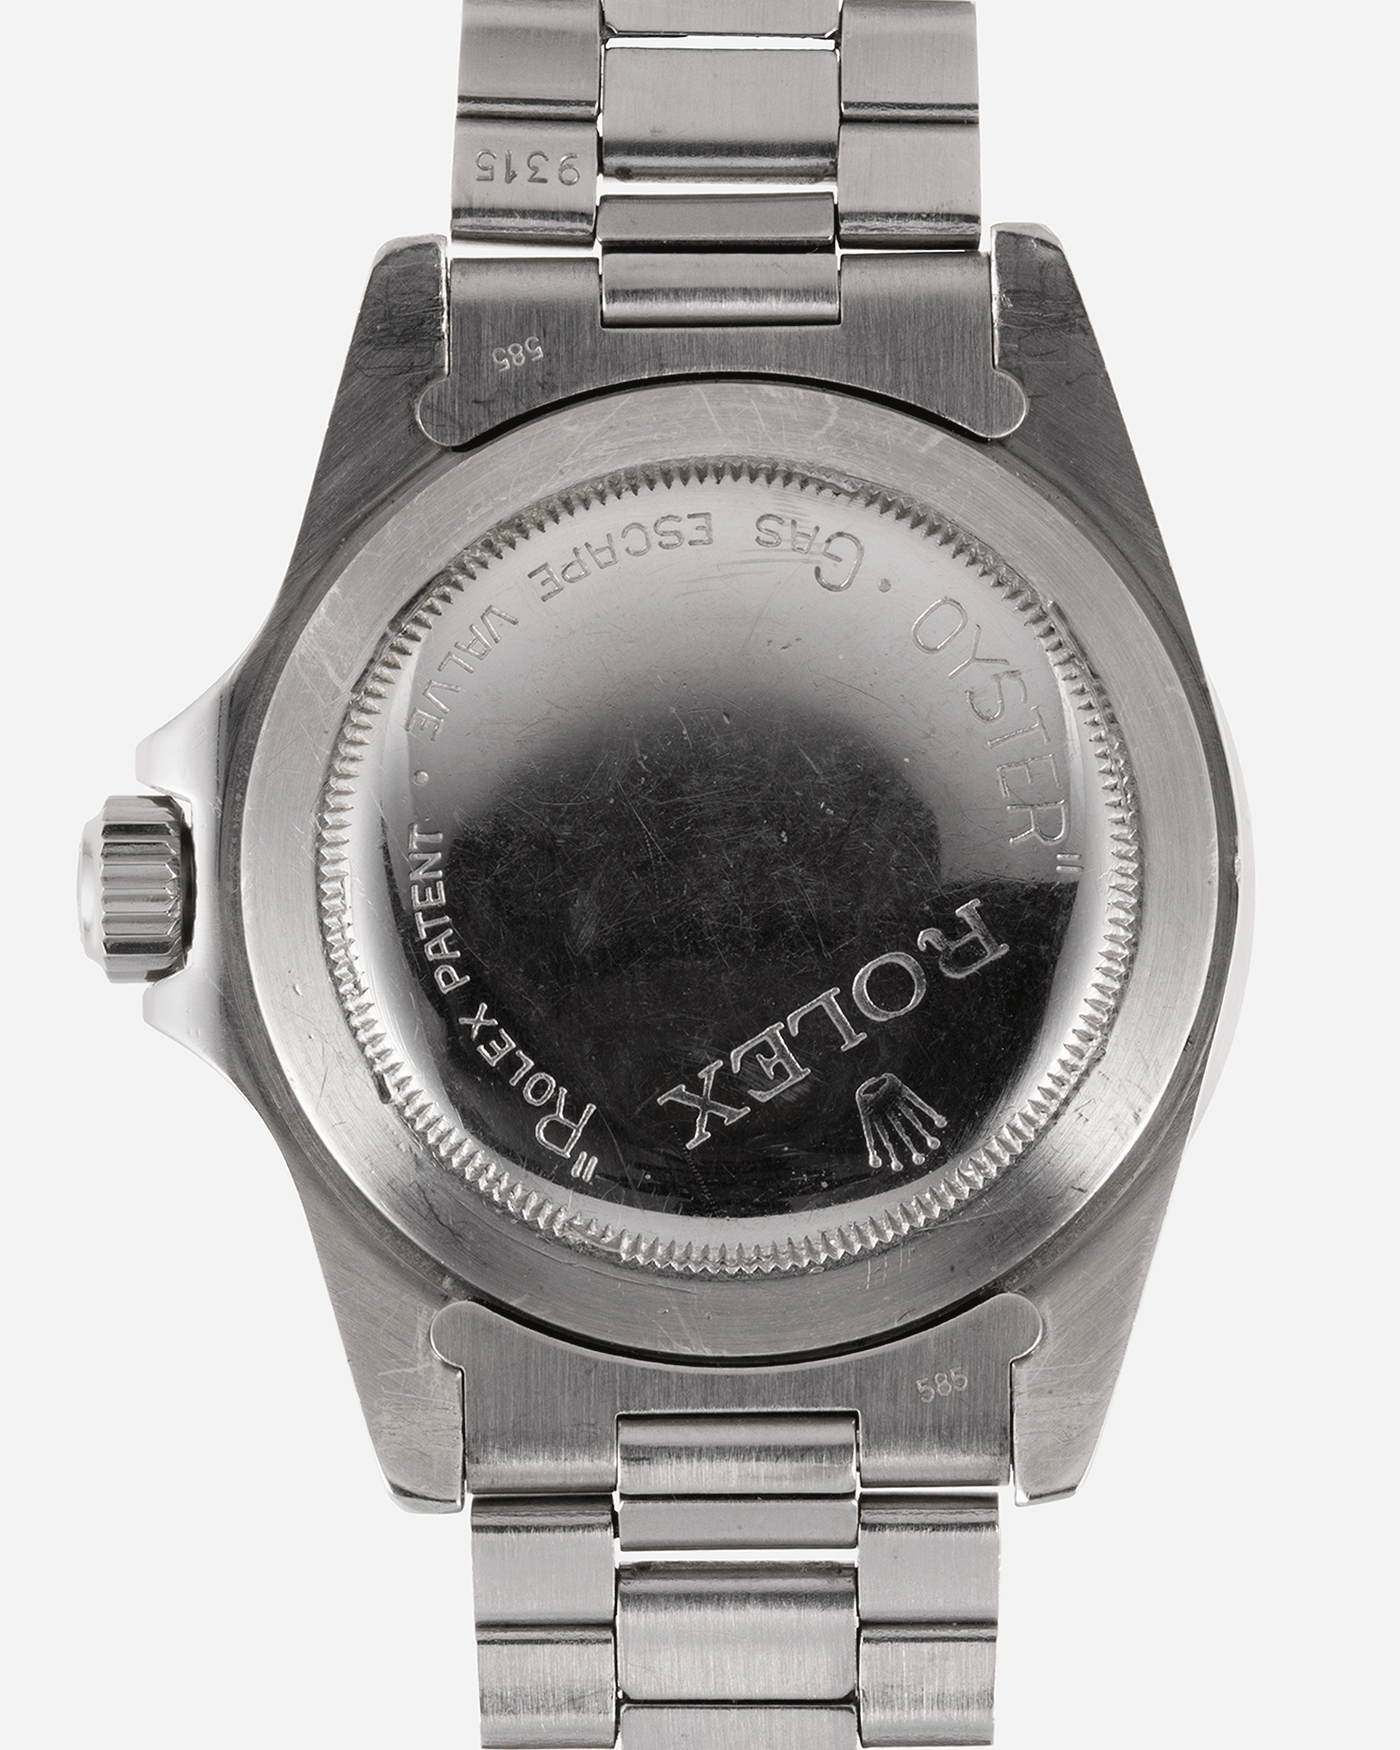 Brand: Rolex Year: 1973 Model: Sea Dweller Reference Number: 1665 Serial Number: 3.7 Mil Material: Stainless Steel Movement: Cal. 1570 Case Diameter: 40mm Lug Width: 20mm Bracelet/Strap: Rolex Pateted 9315 Folded Bracelet with 585 Endlinks 